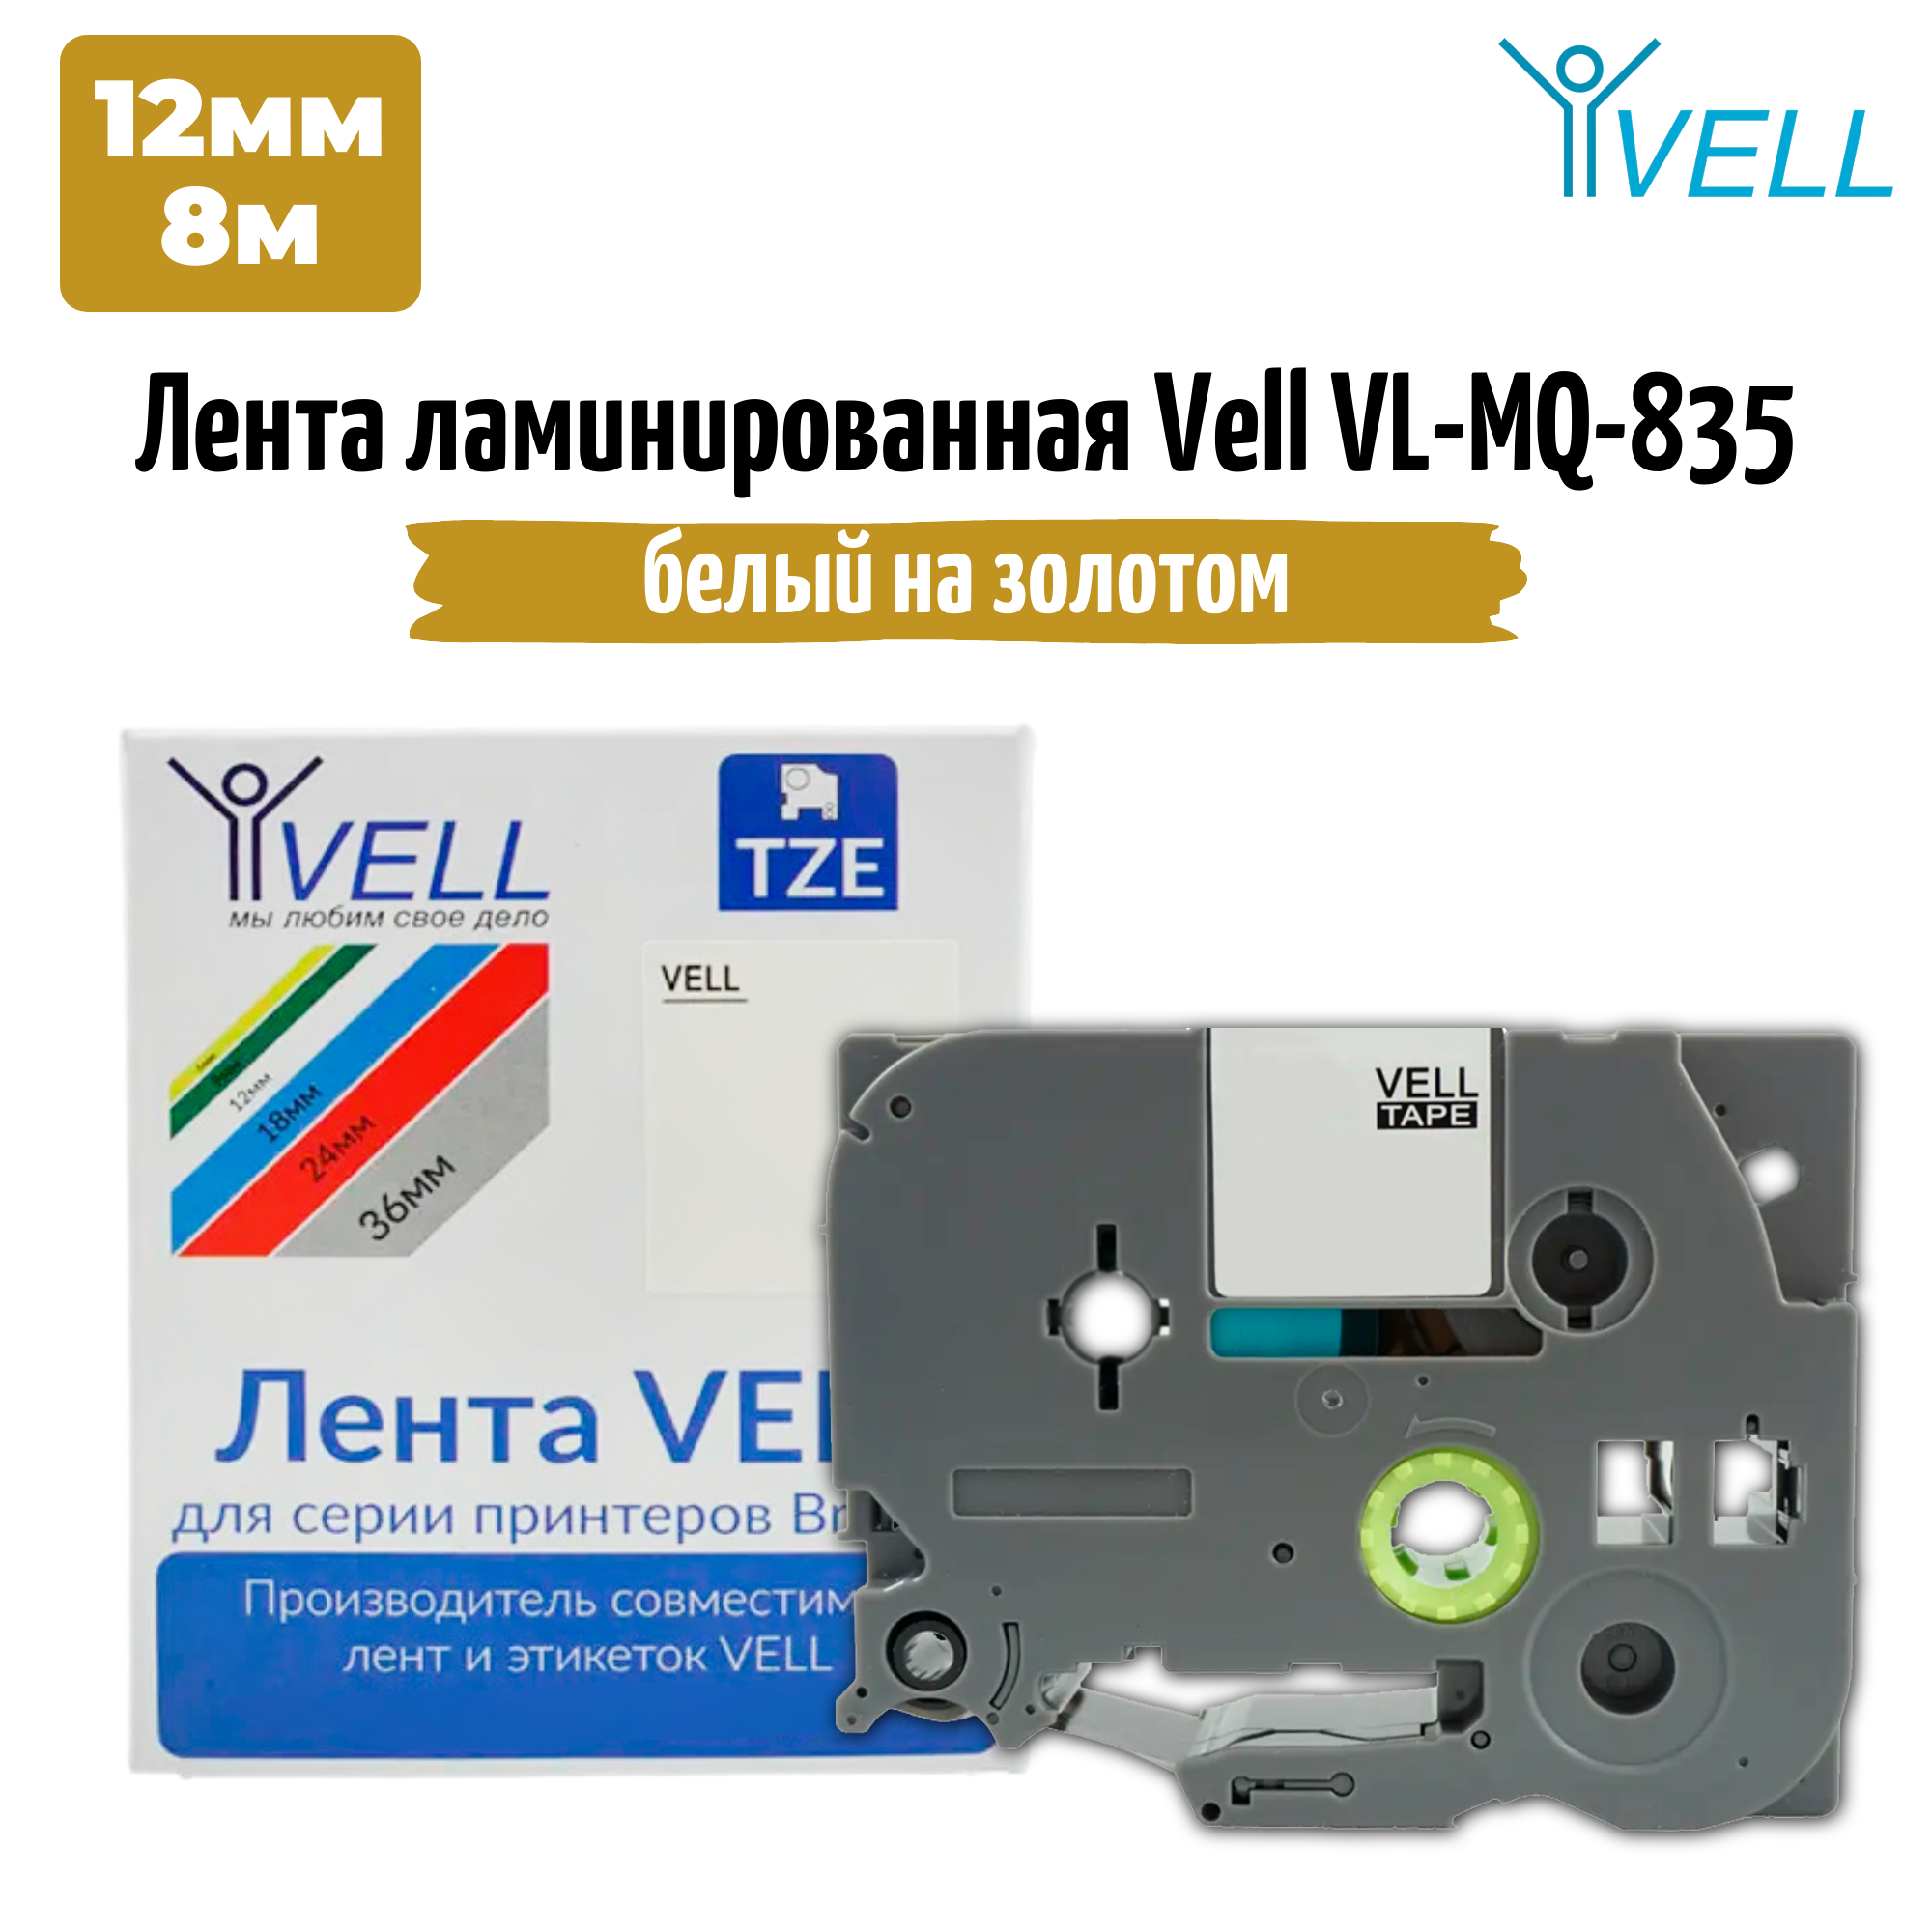 Лента Vell MQ-835 (12 мм, белый на золотом) для PT 1010/1280/D200/H105/E100/ D600/E300/2700/ P700/E550/9700 {Vell-MQ835}